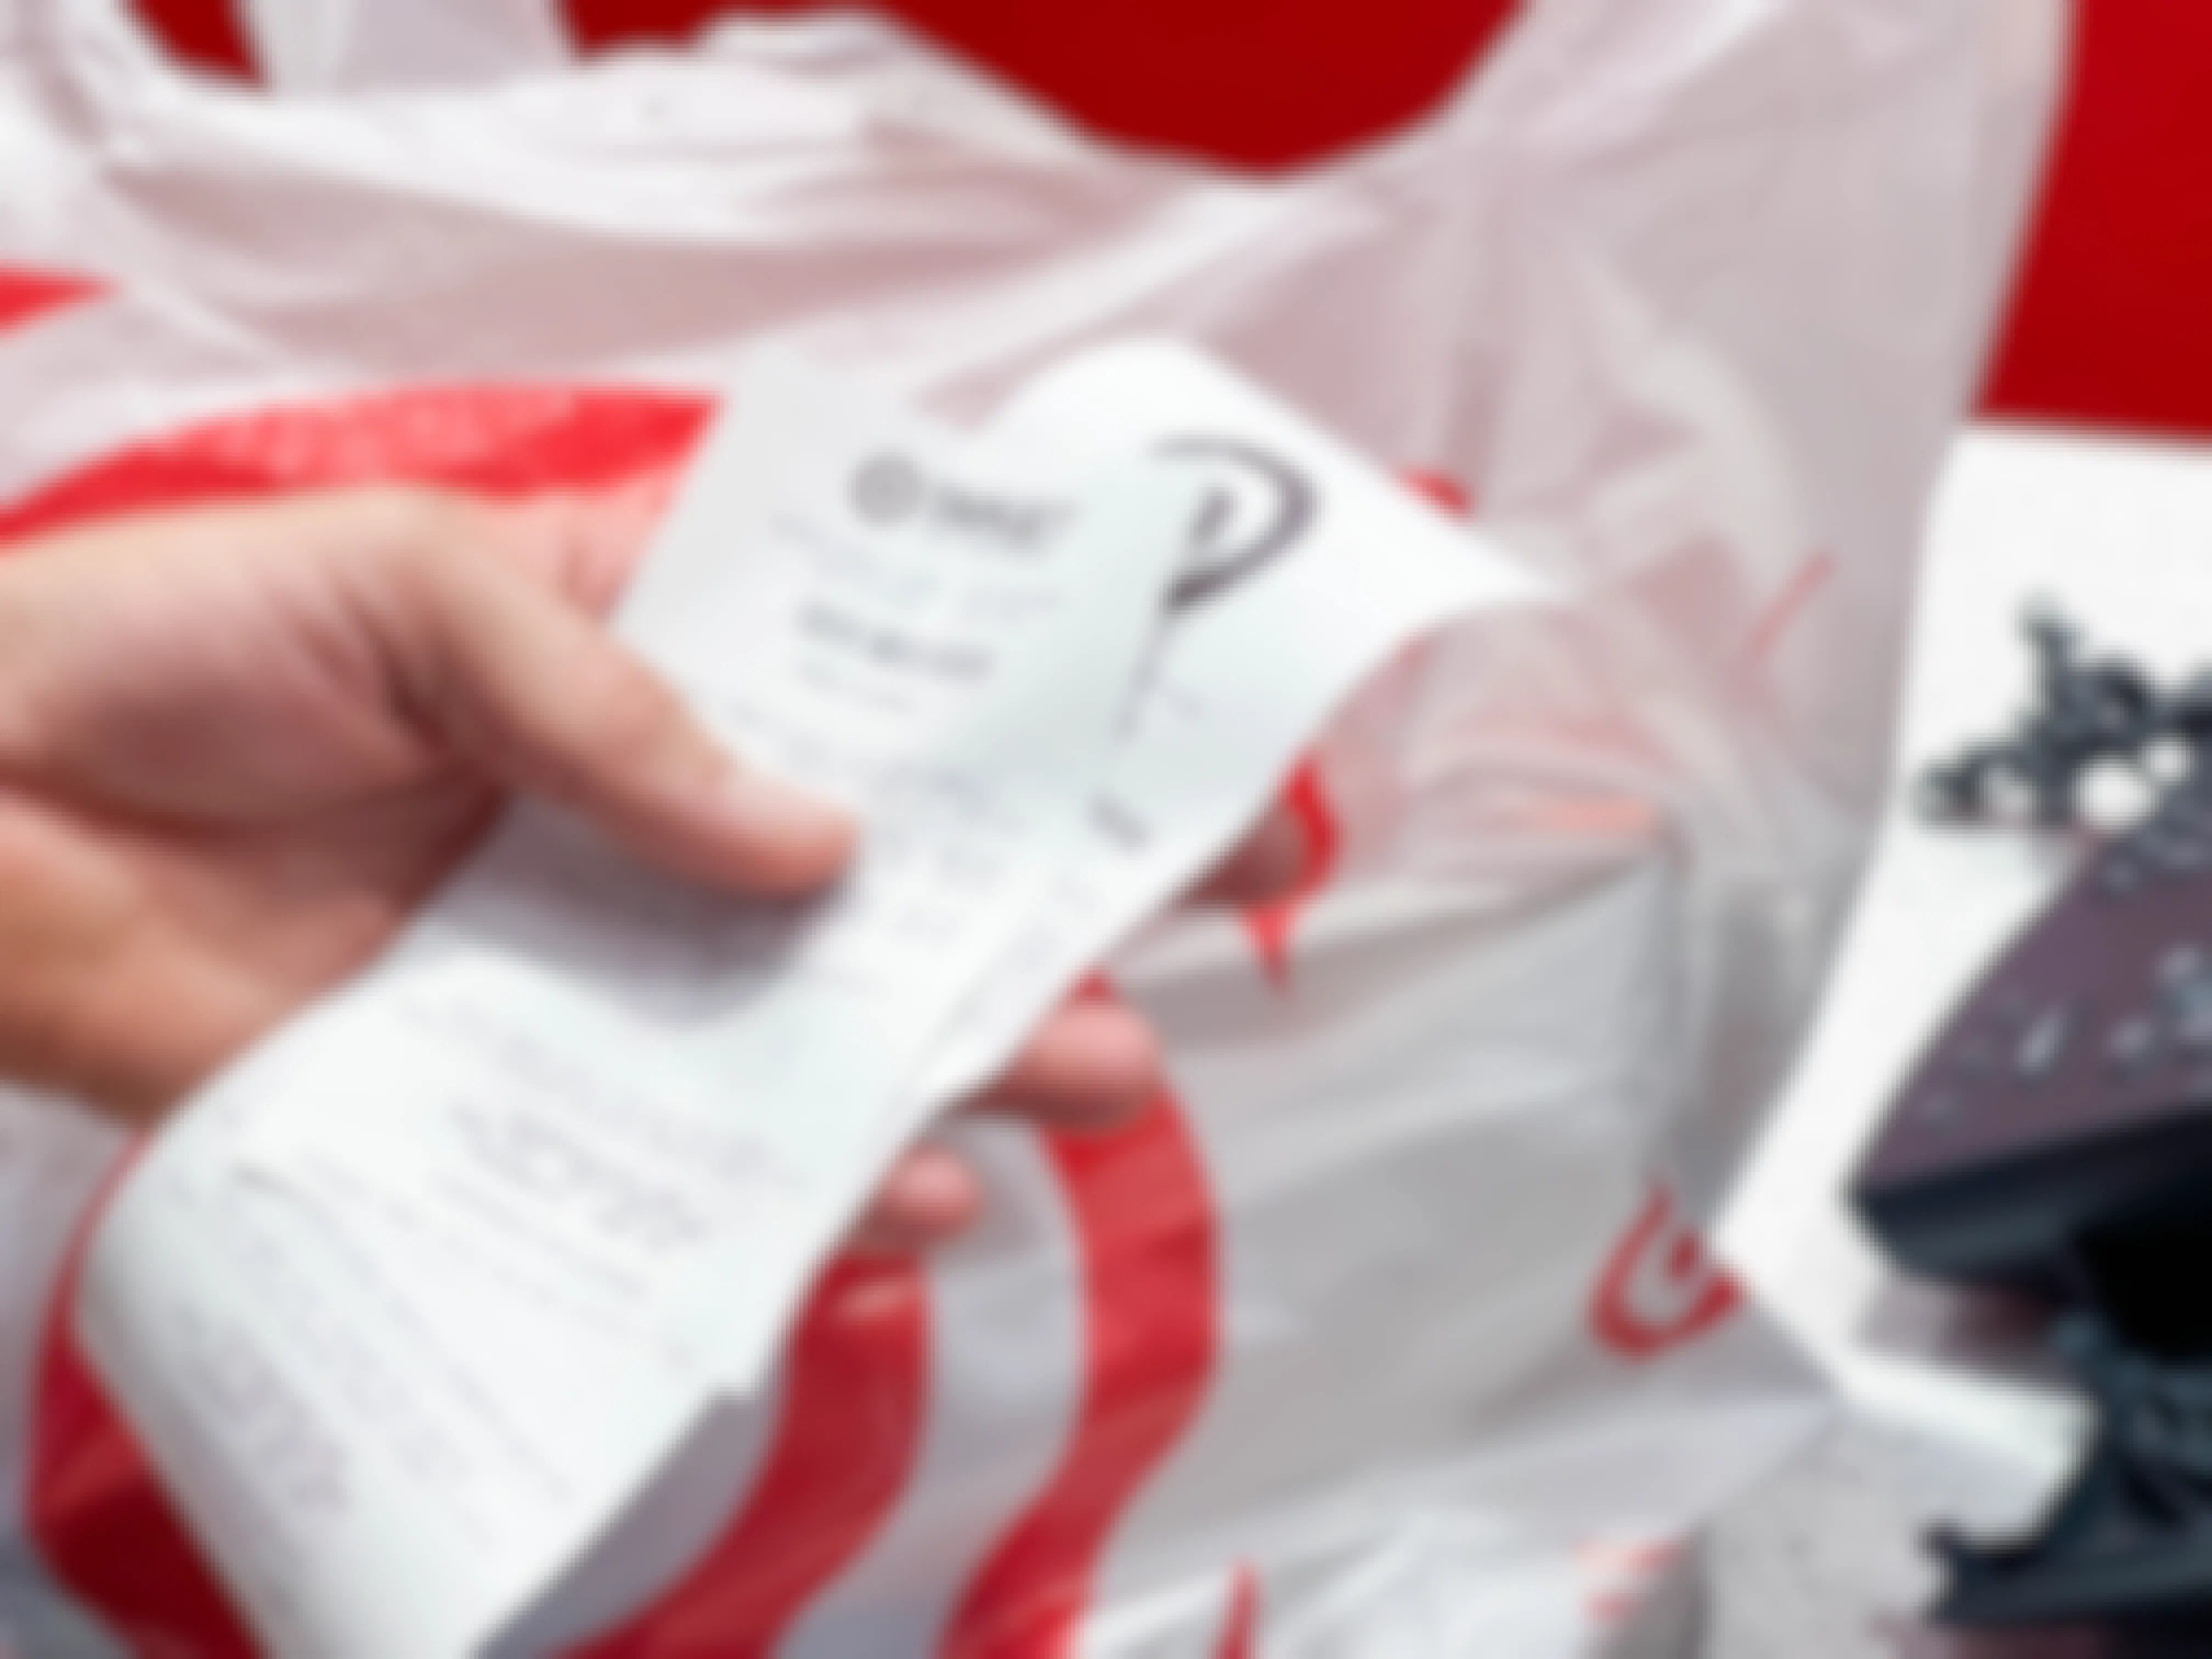 target return receipts and bag